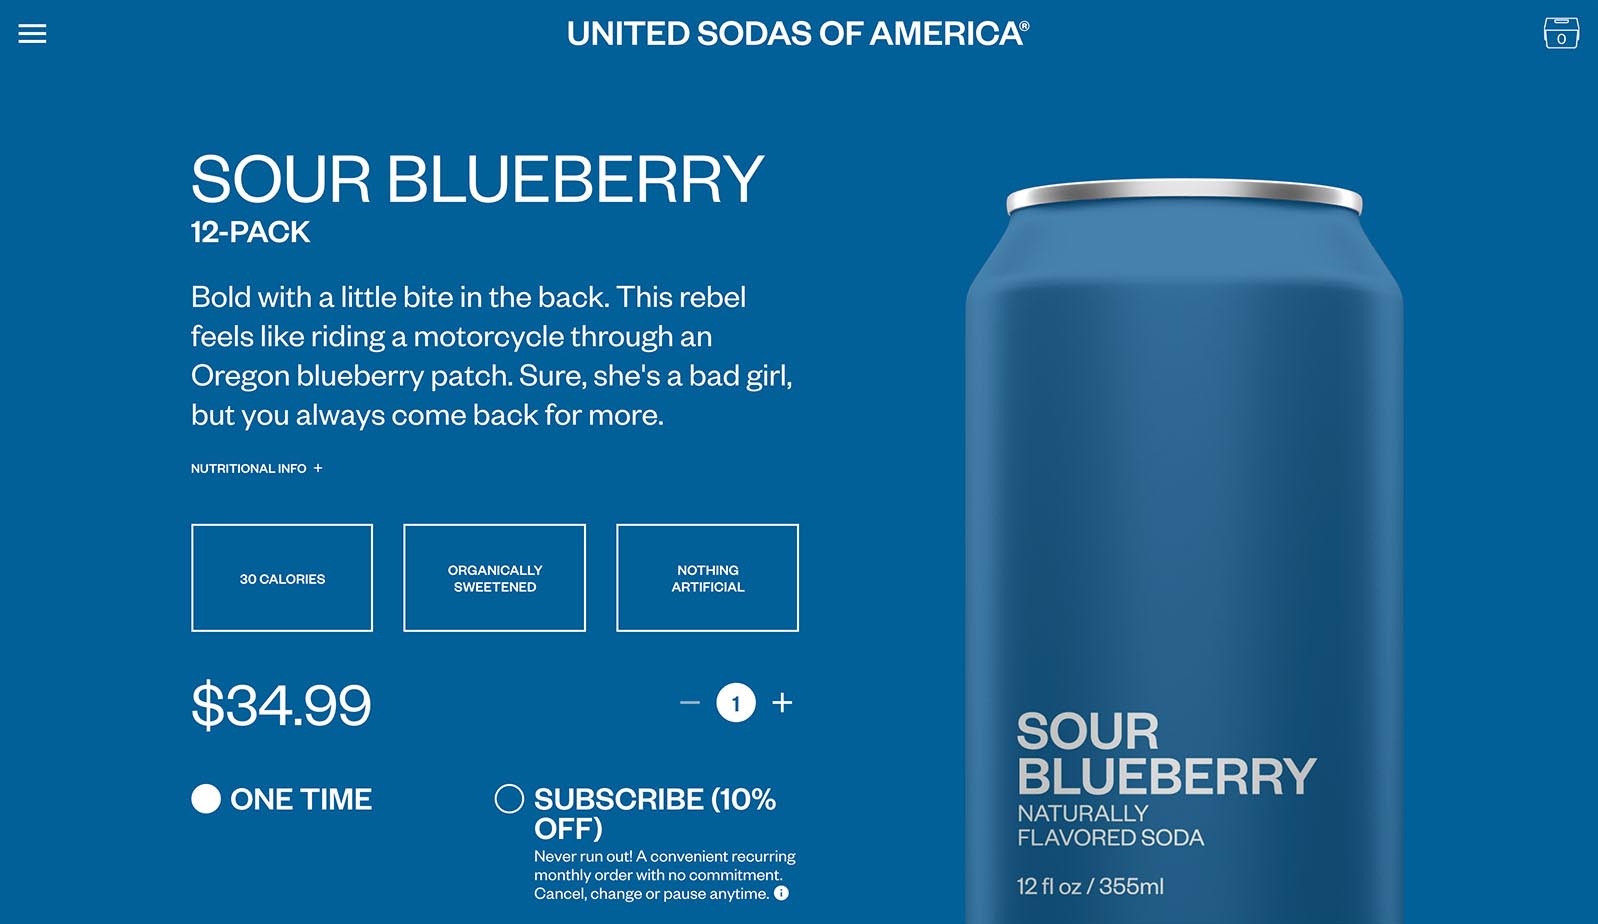 image of united sodas website